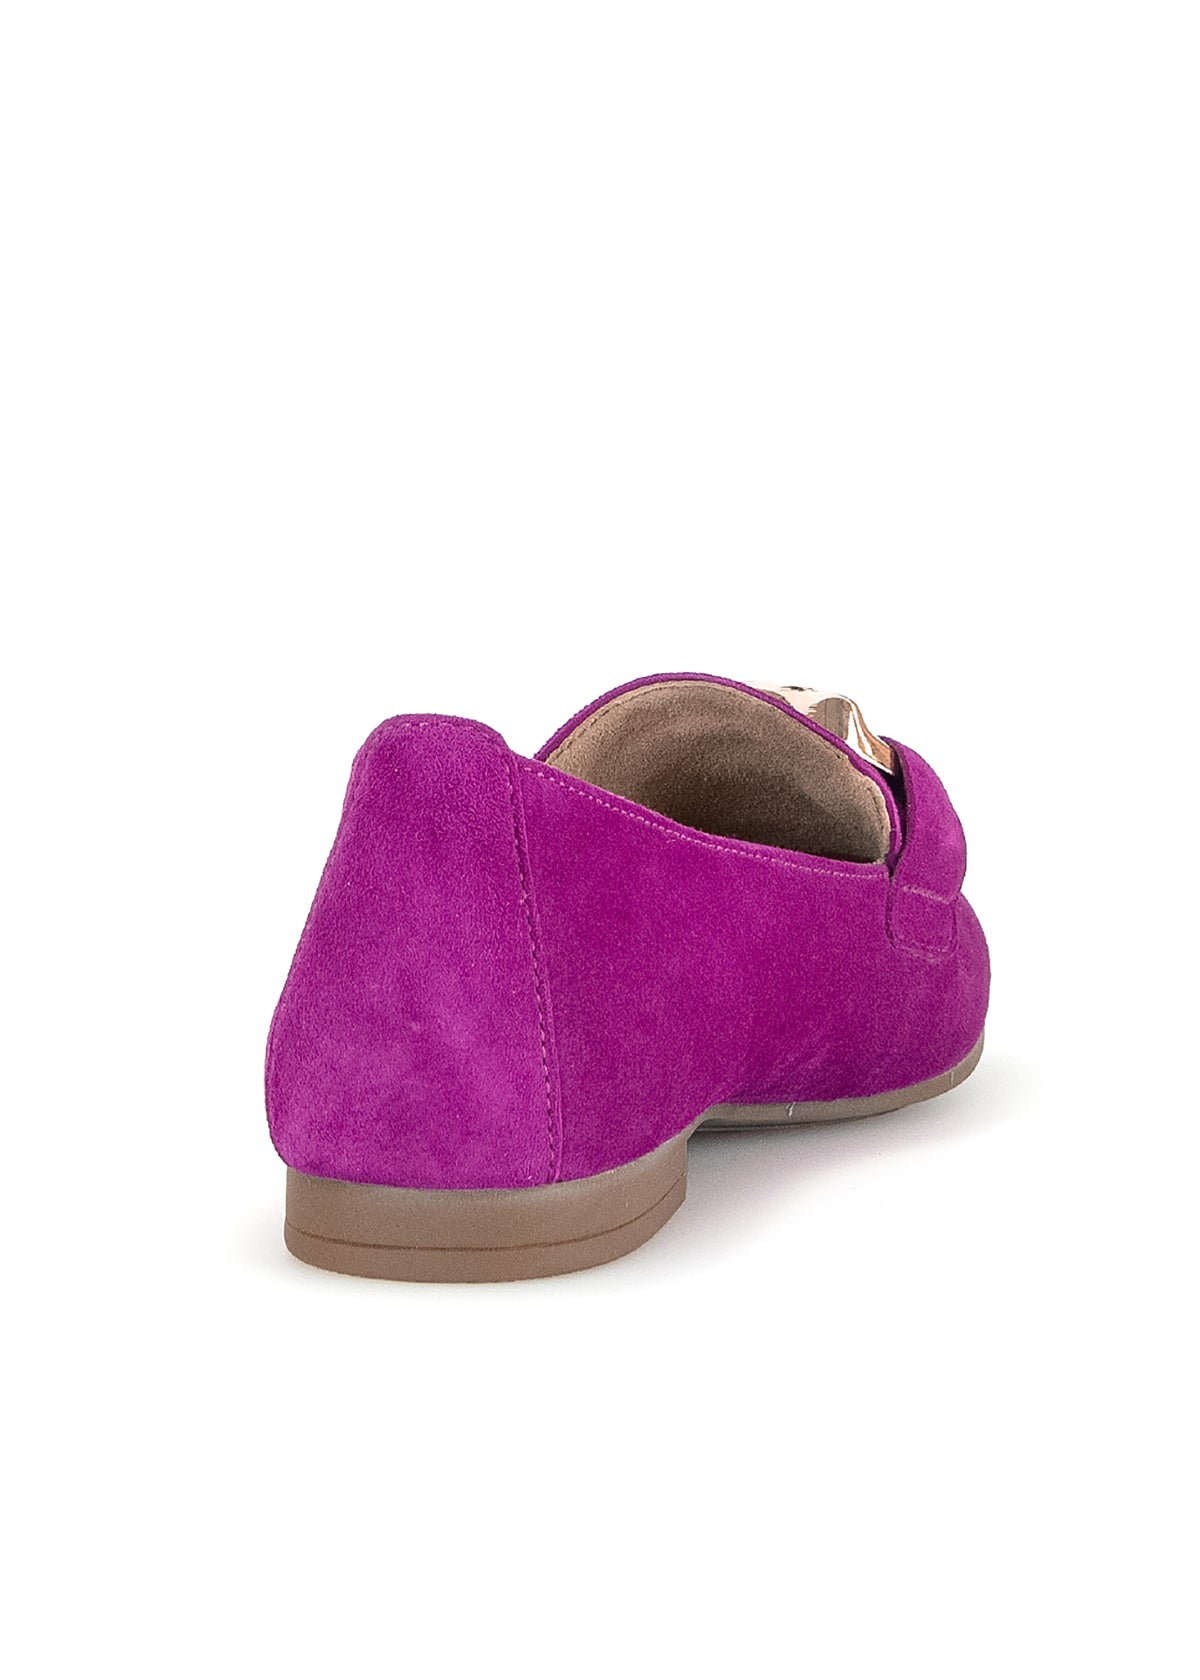 Loafers - purple nubuck leather, gold buckle decoration